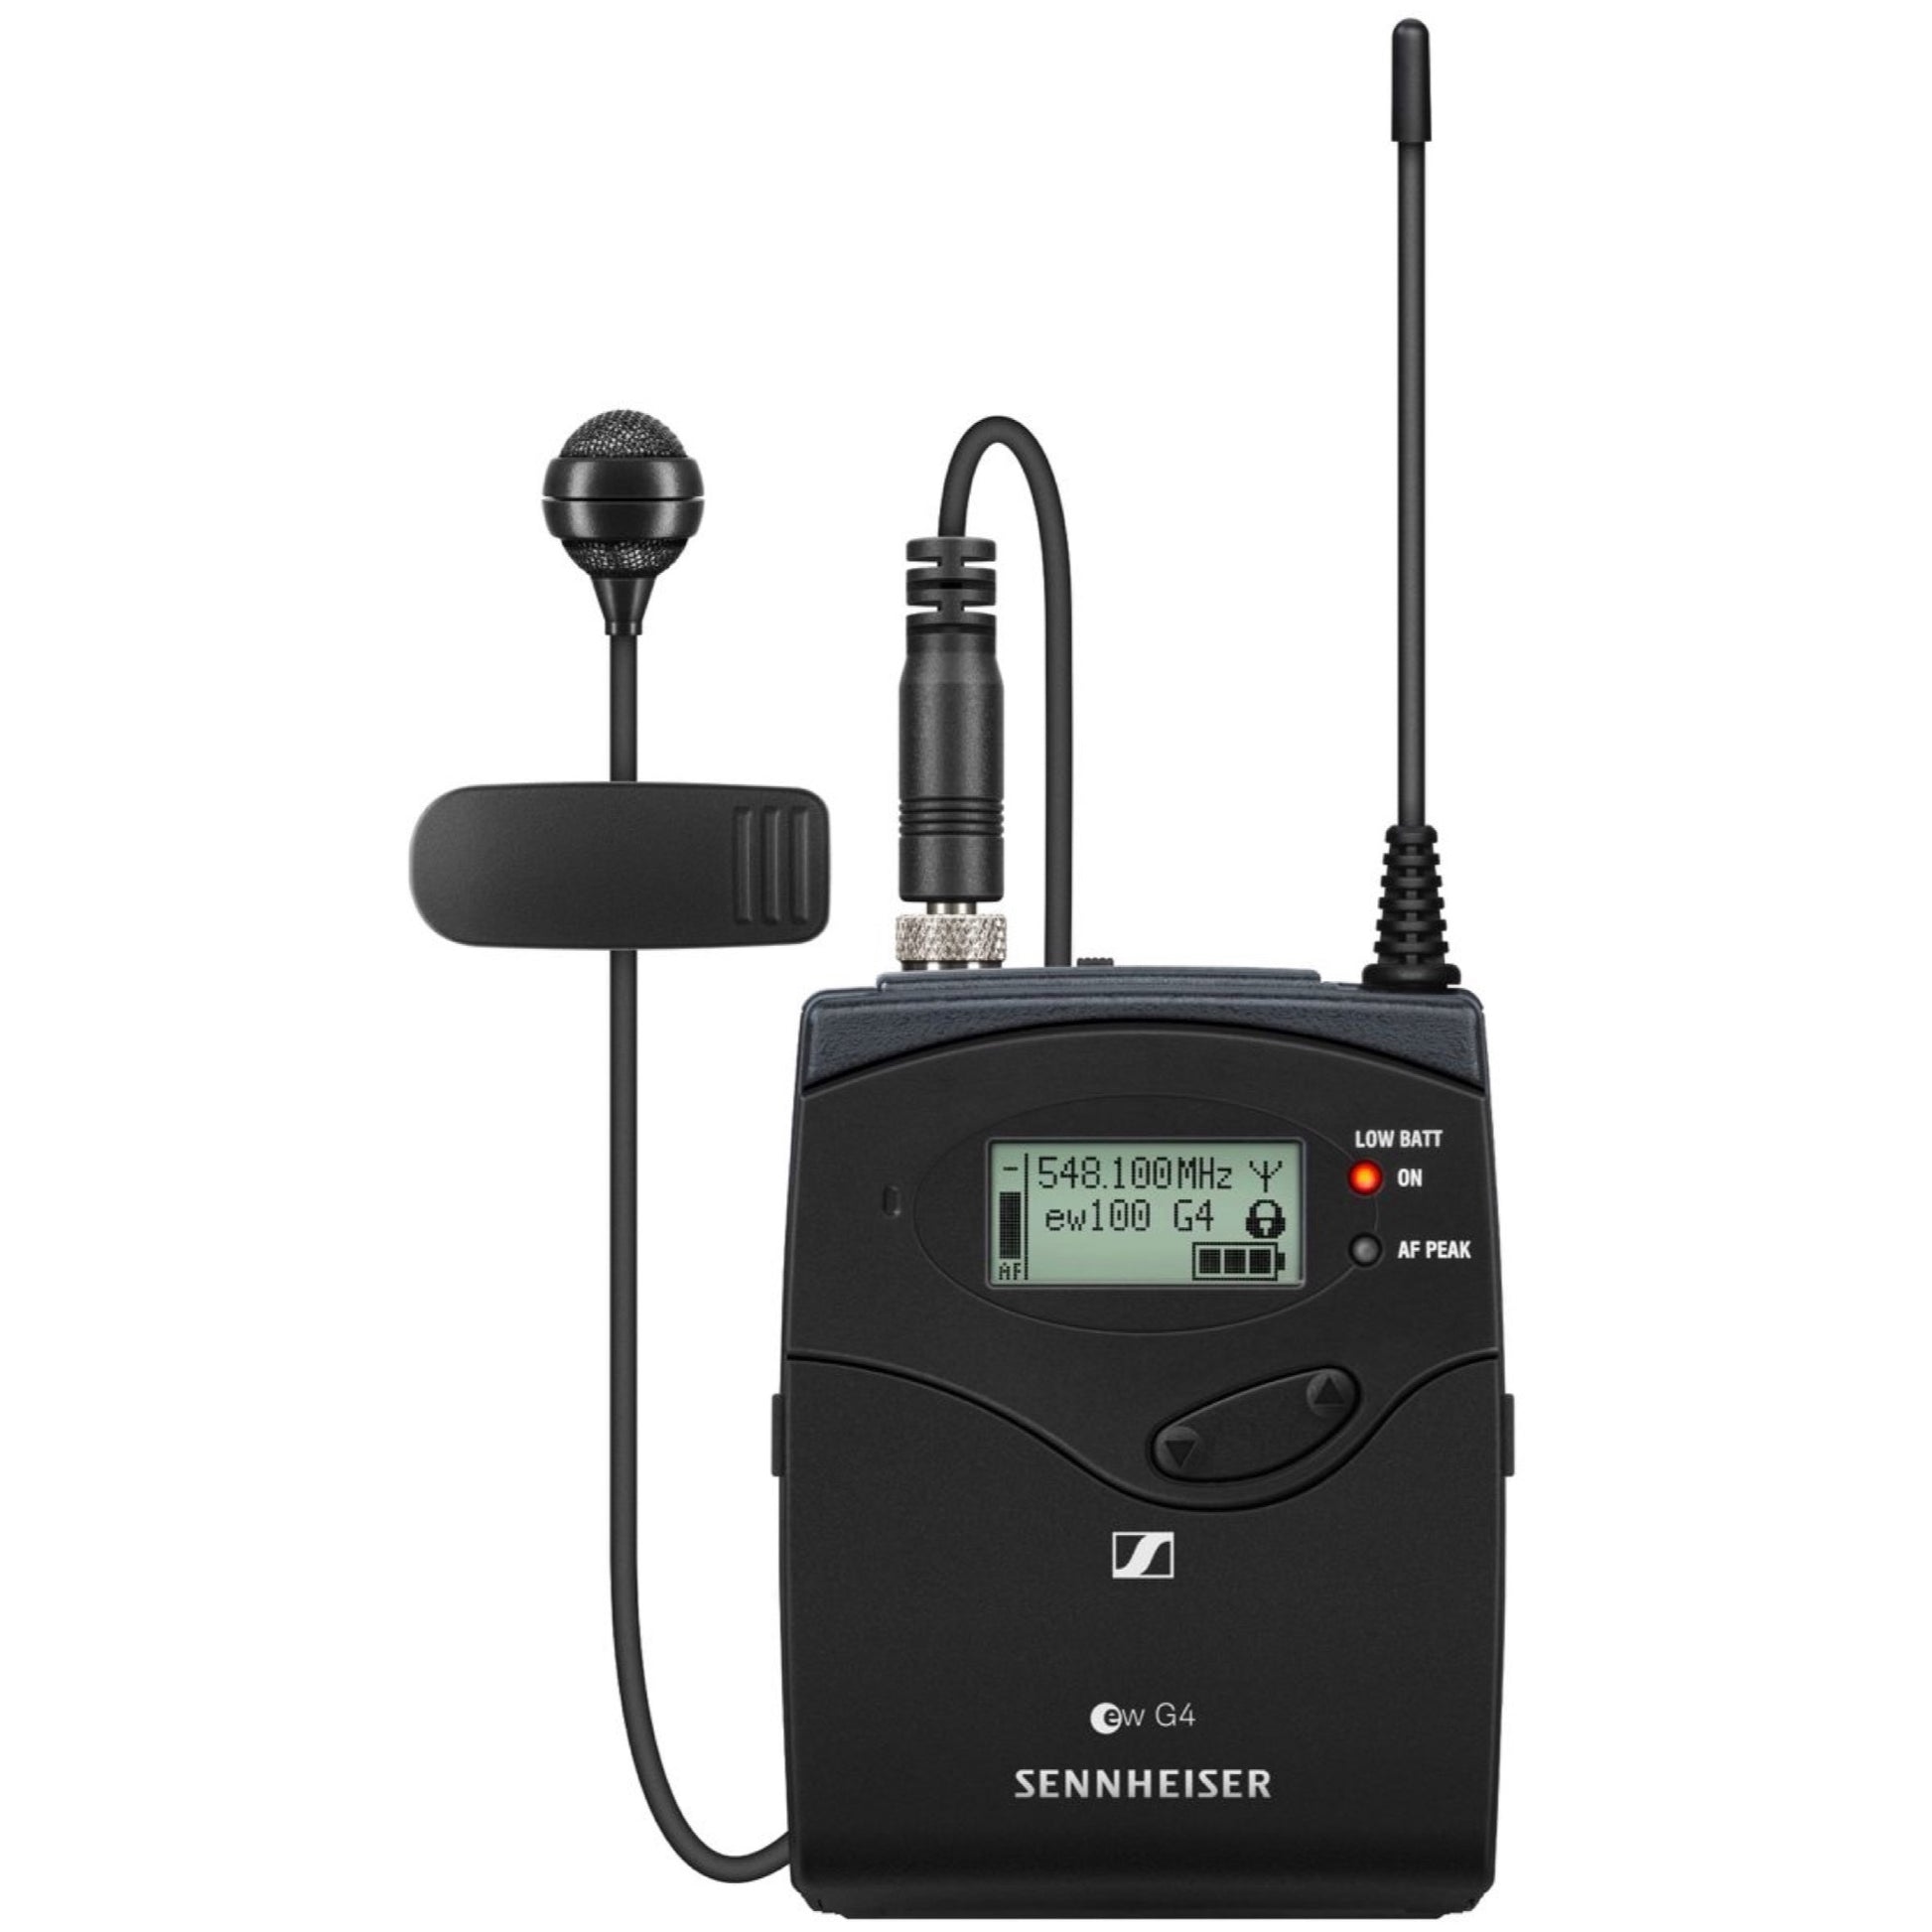 Sennheiser ew100 G4 ME4 Wireless Lavalier Microphone System, Band G (566-608 MHz)